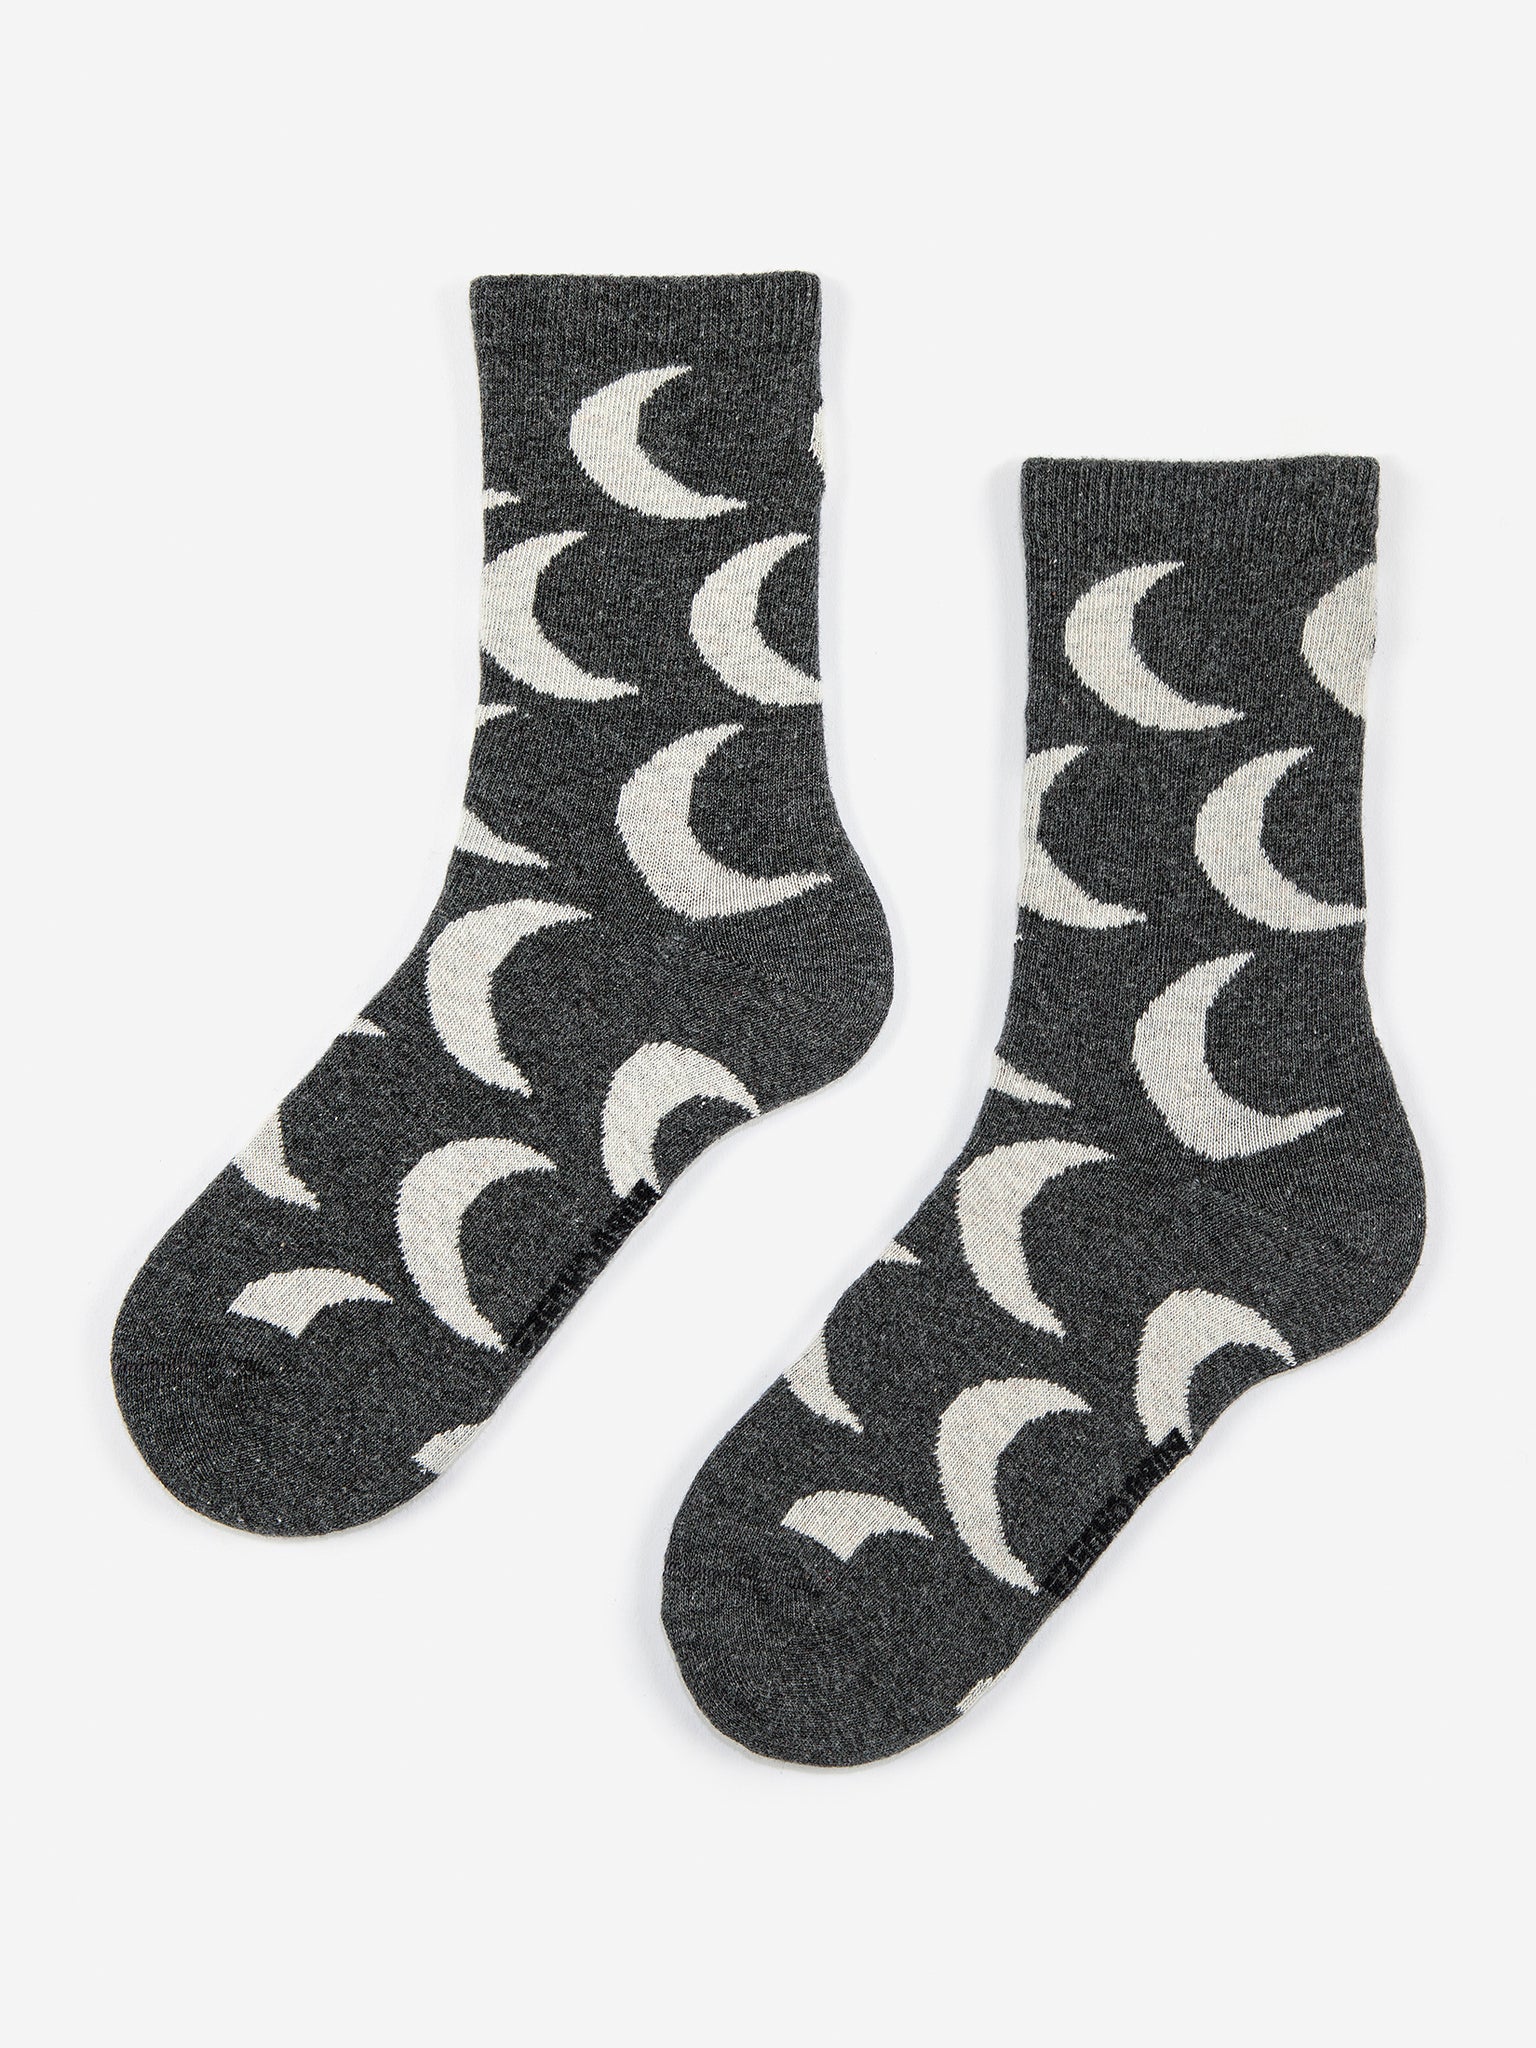 Moons long socks